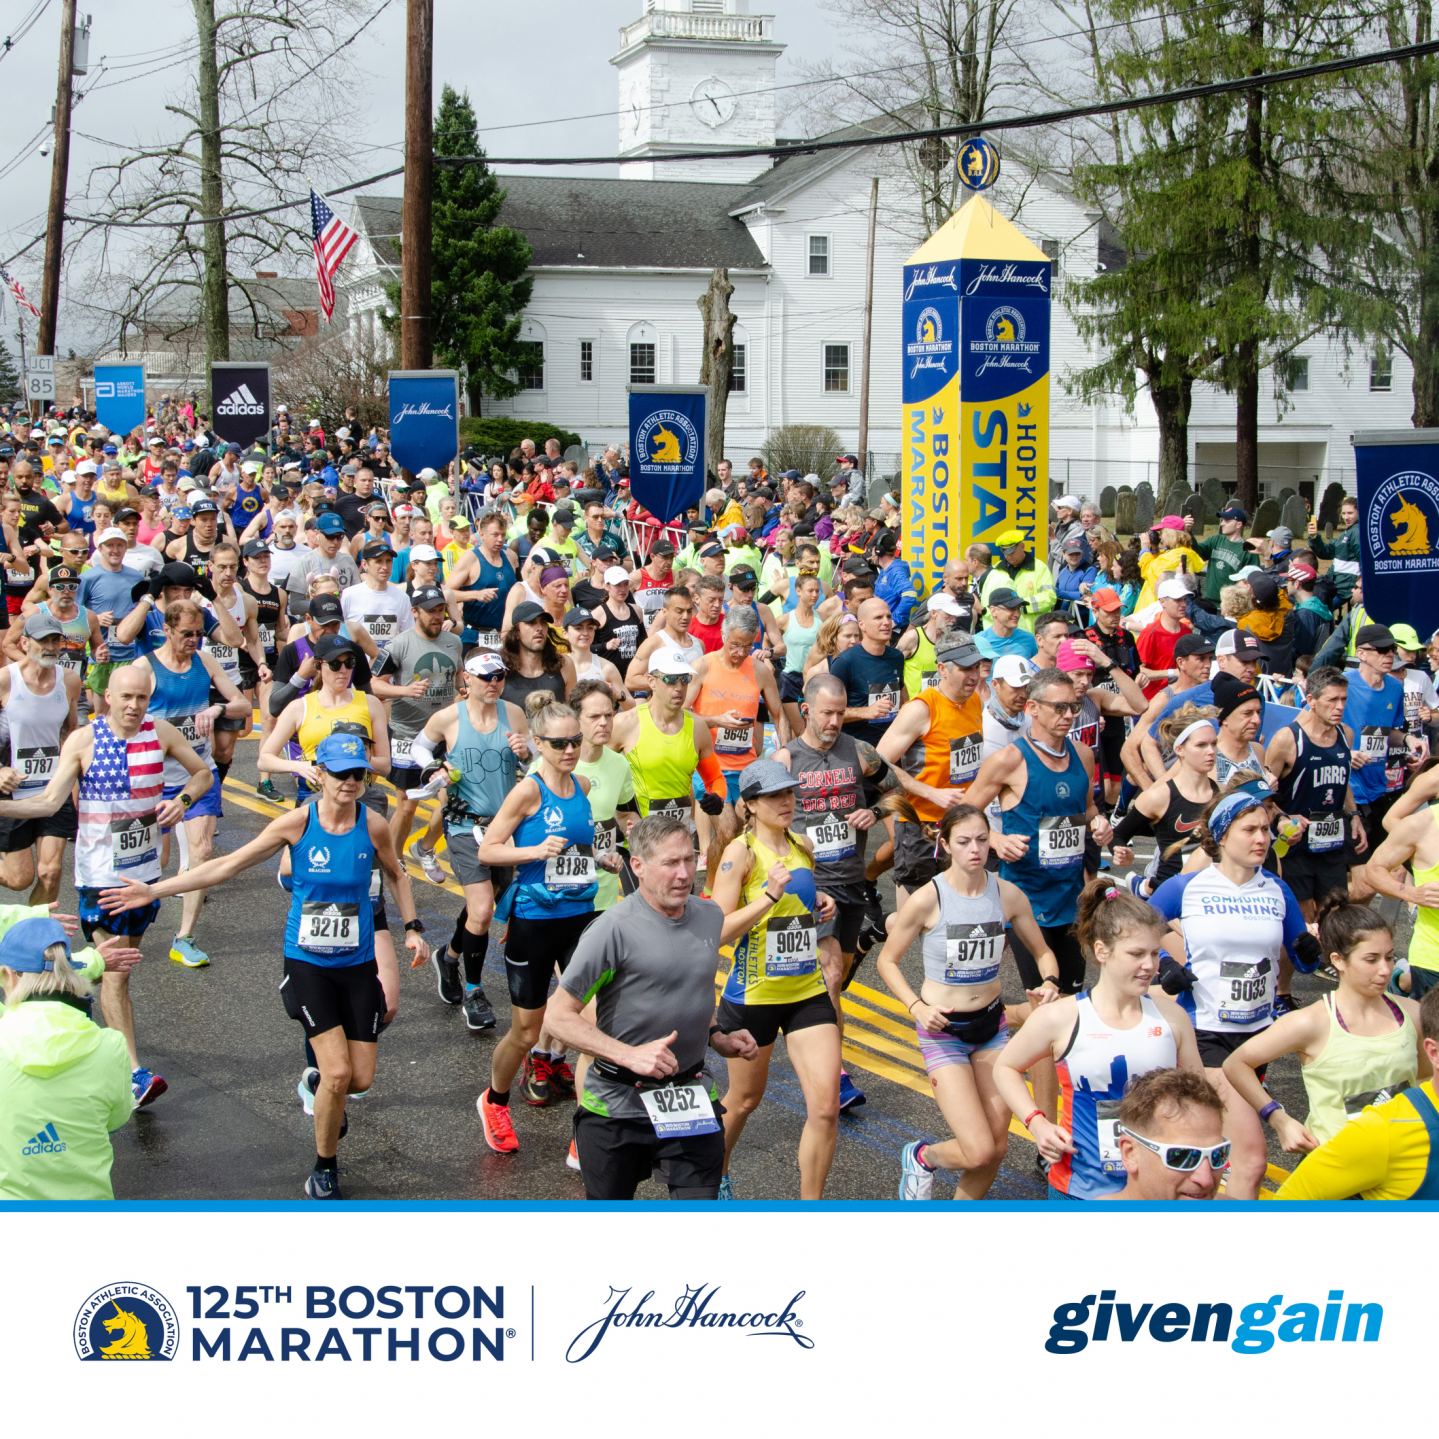 GivenGain has partnered with the Boston Marathon